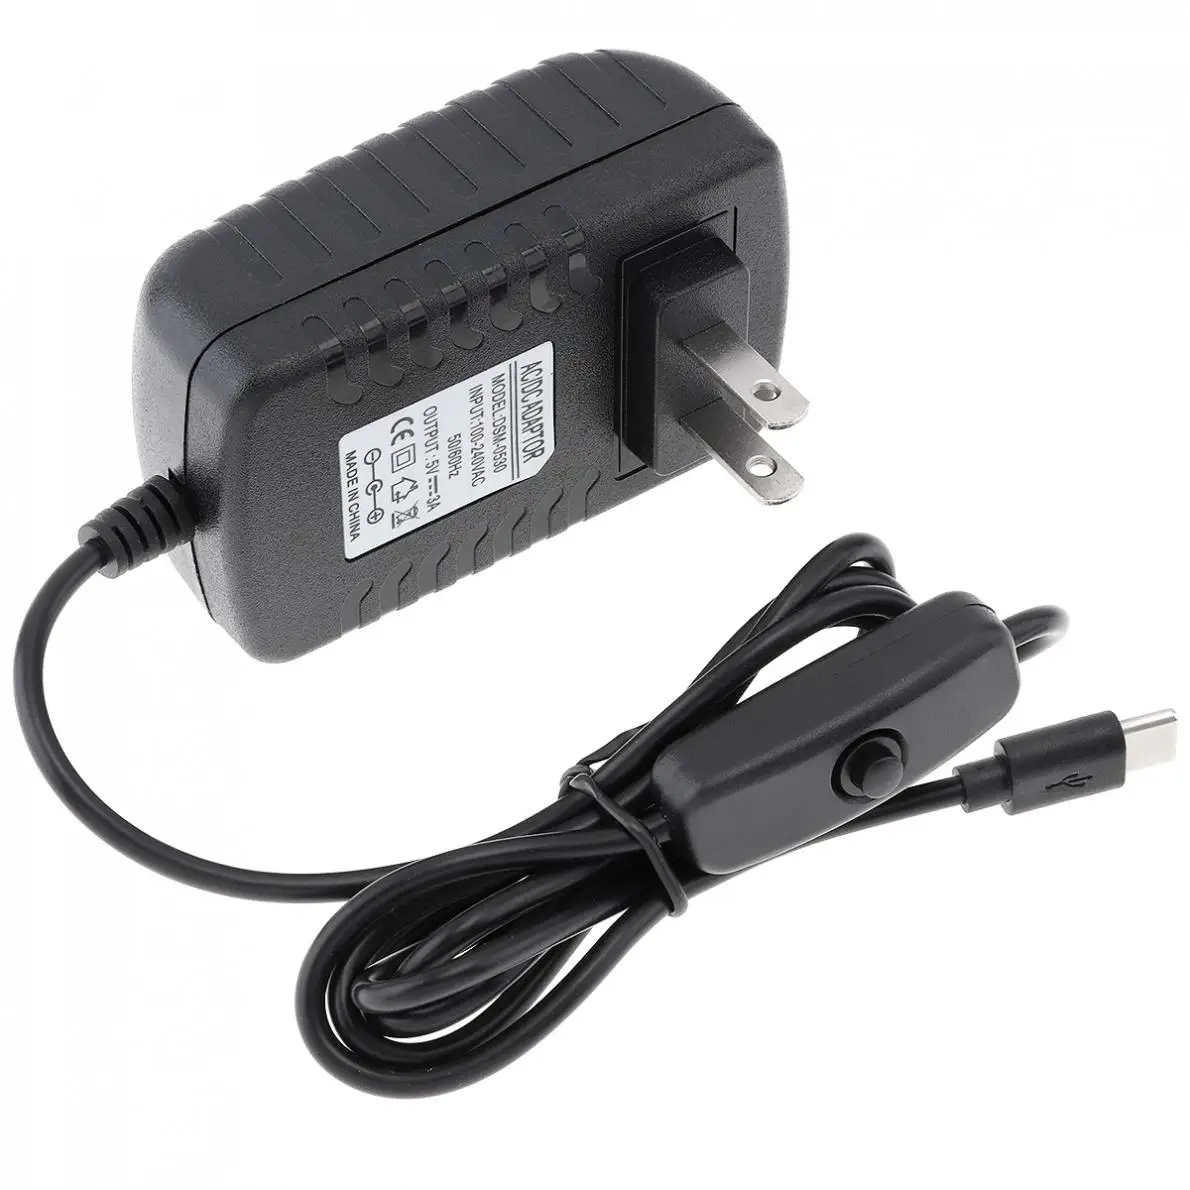 5V 3A адаптер питания зарядное устройство конвертер с переключателем подходит для Raspberry Pi4 USB Type C Зарядка питания